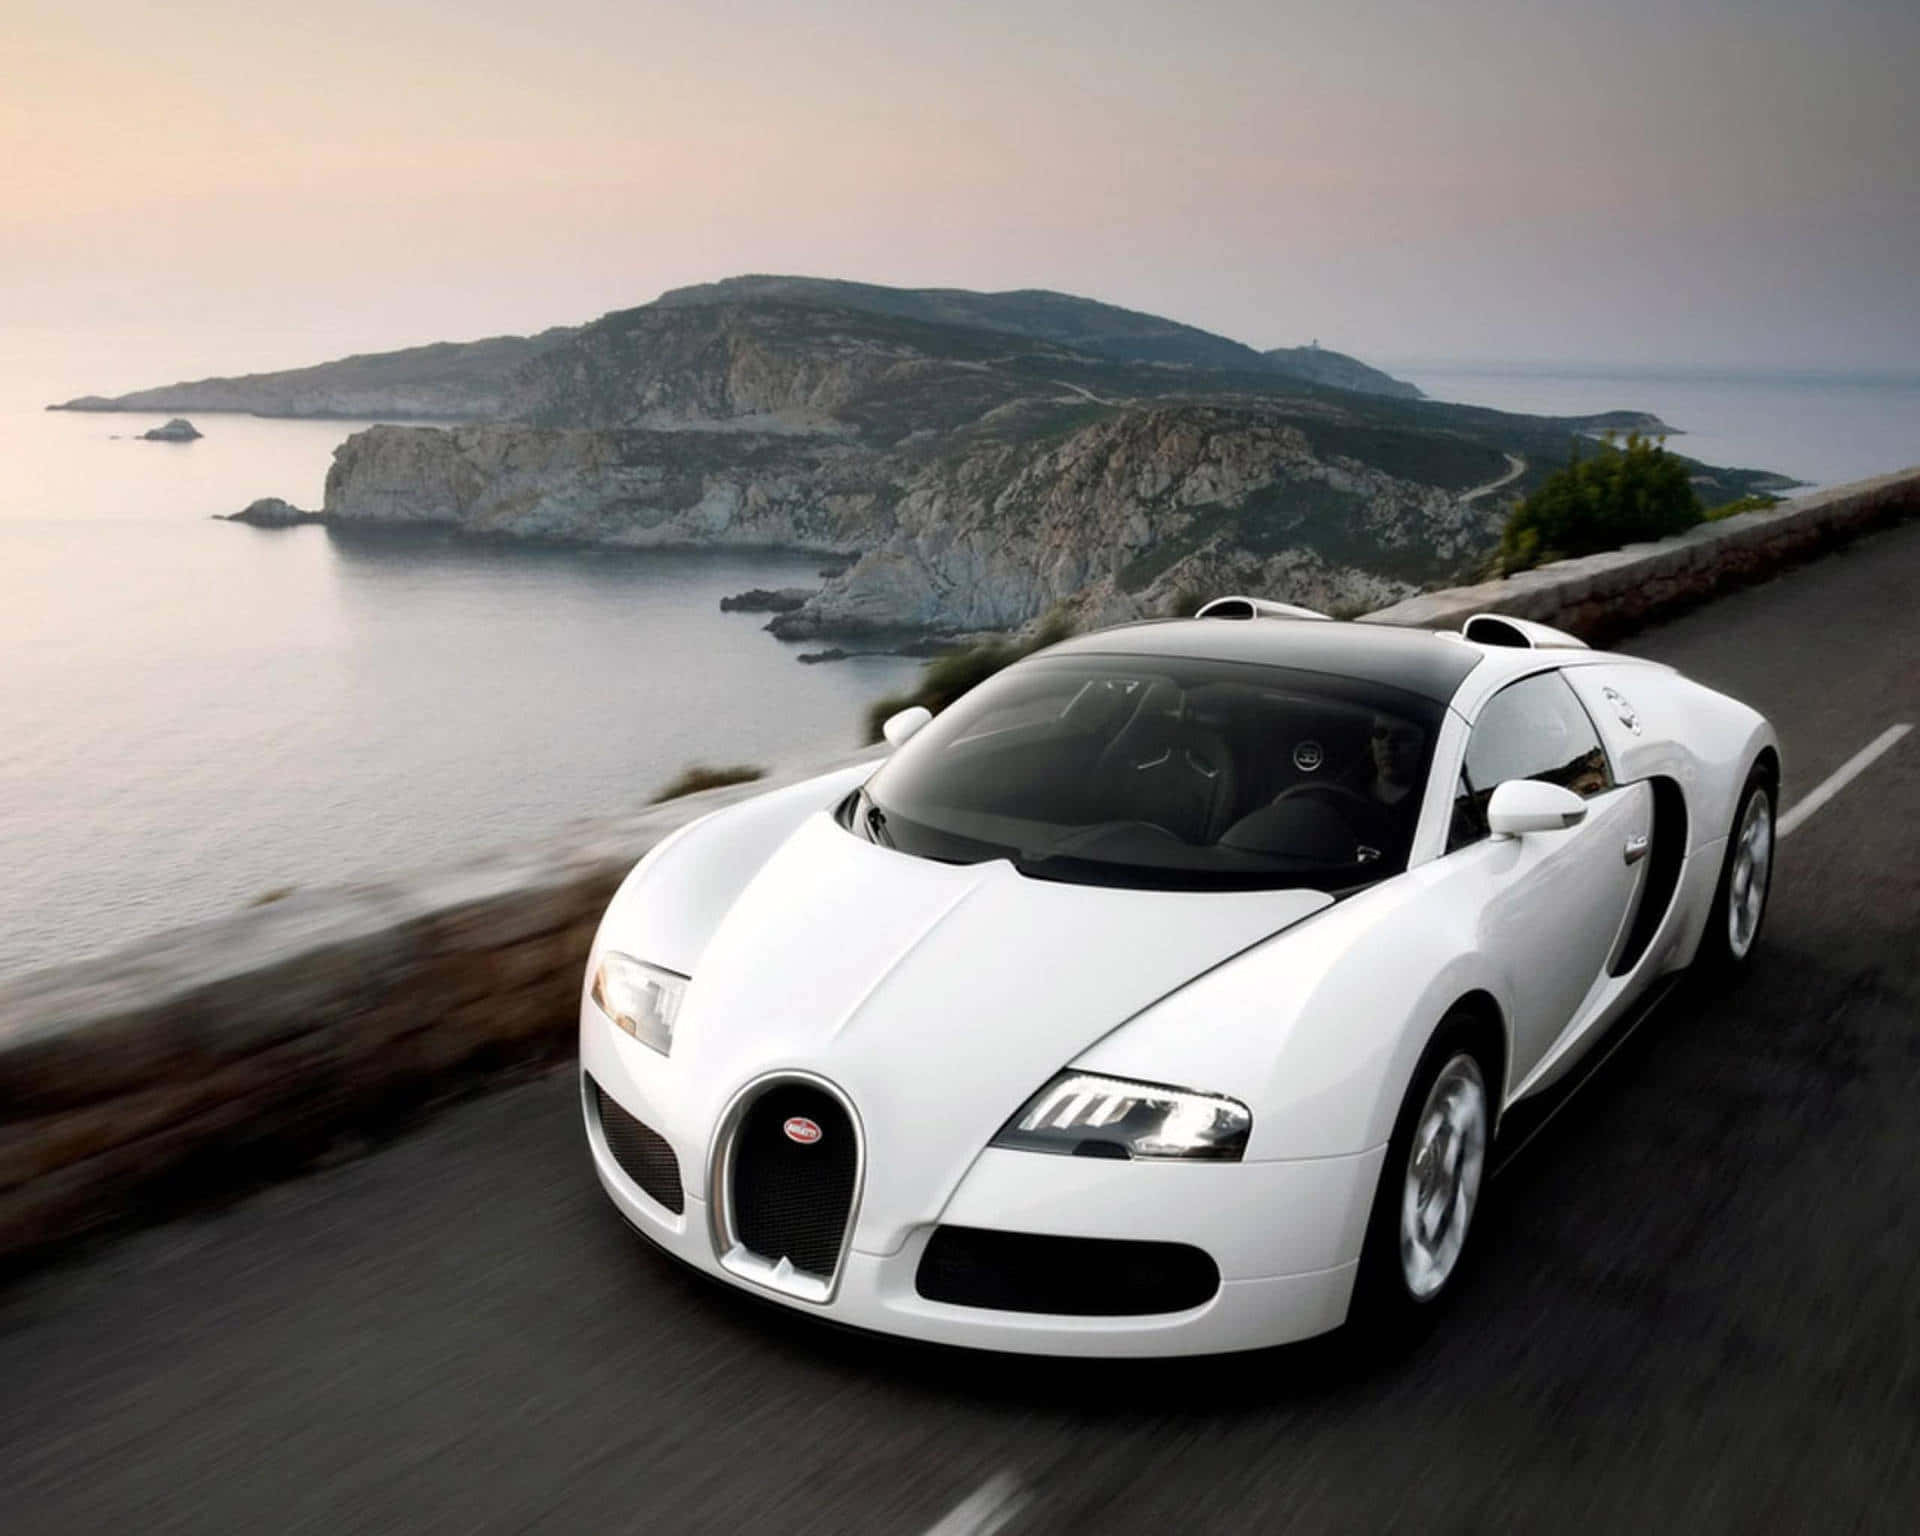 Stunning Bugatti Veyron in Action Wallpaper